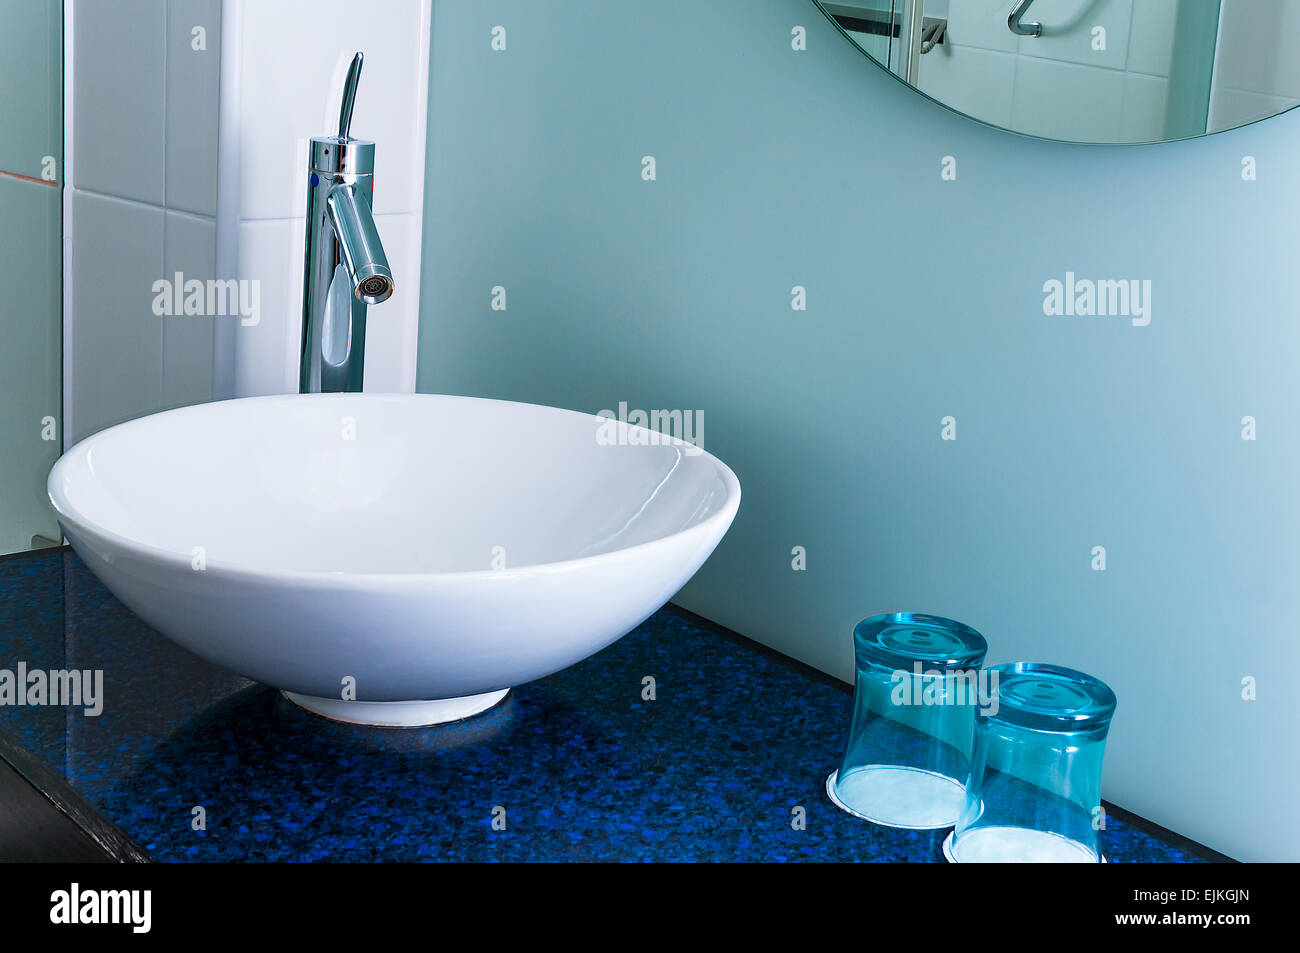 Bathroom sink counter tap mixer glass blue Stock Photo